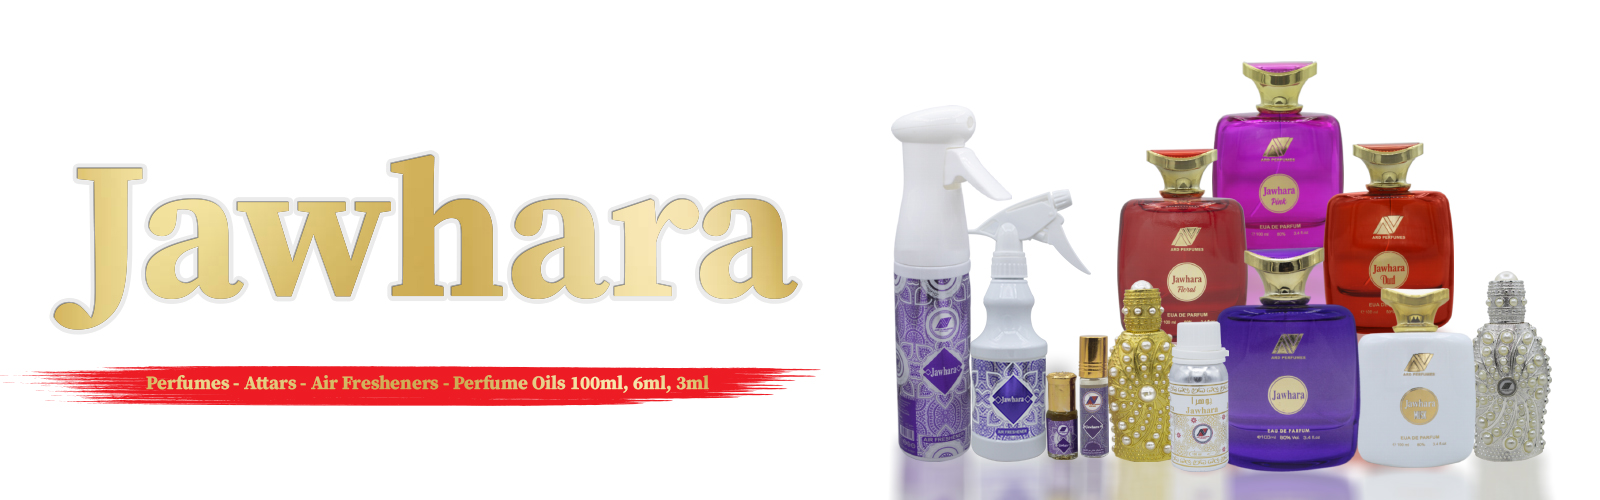 Jawhara Perfume, Attar, Air Freshener, 100ml by ARD PERFUMES